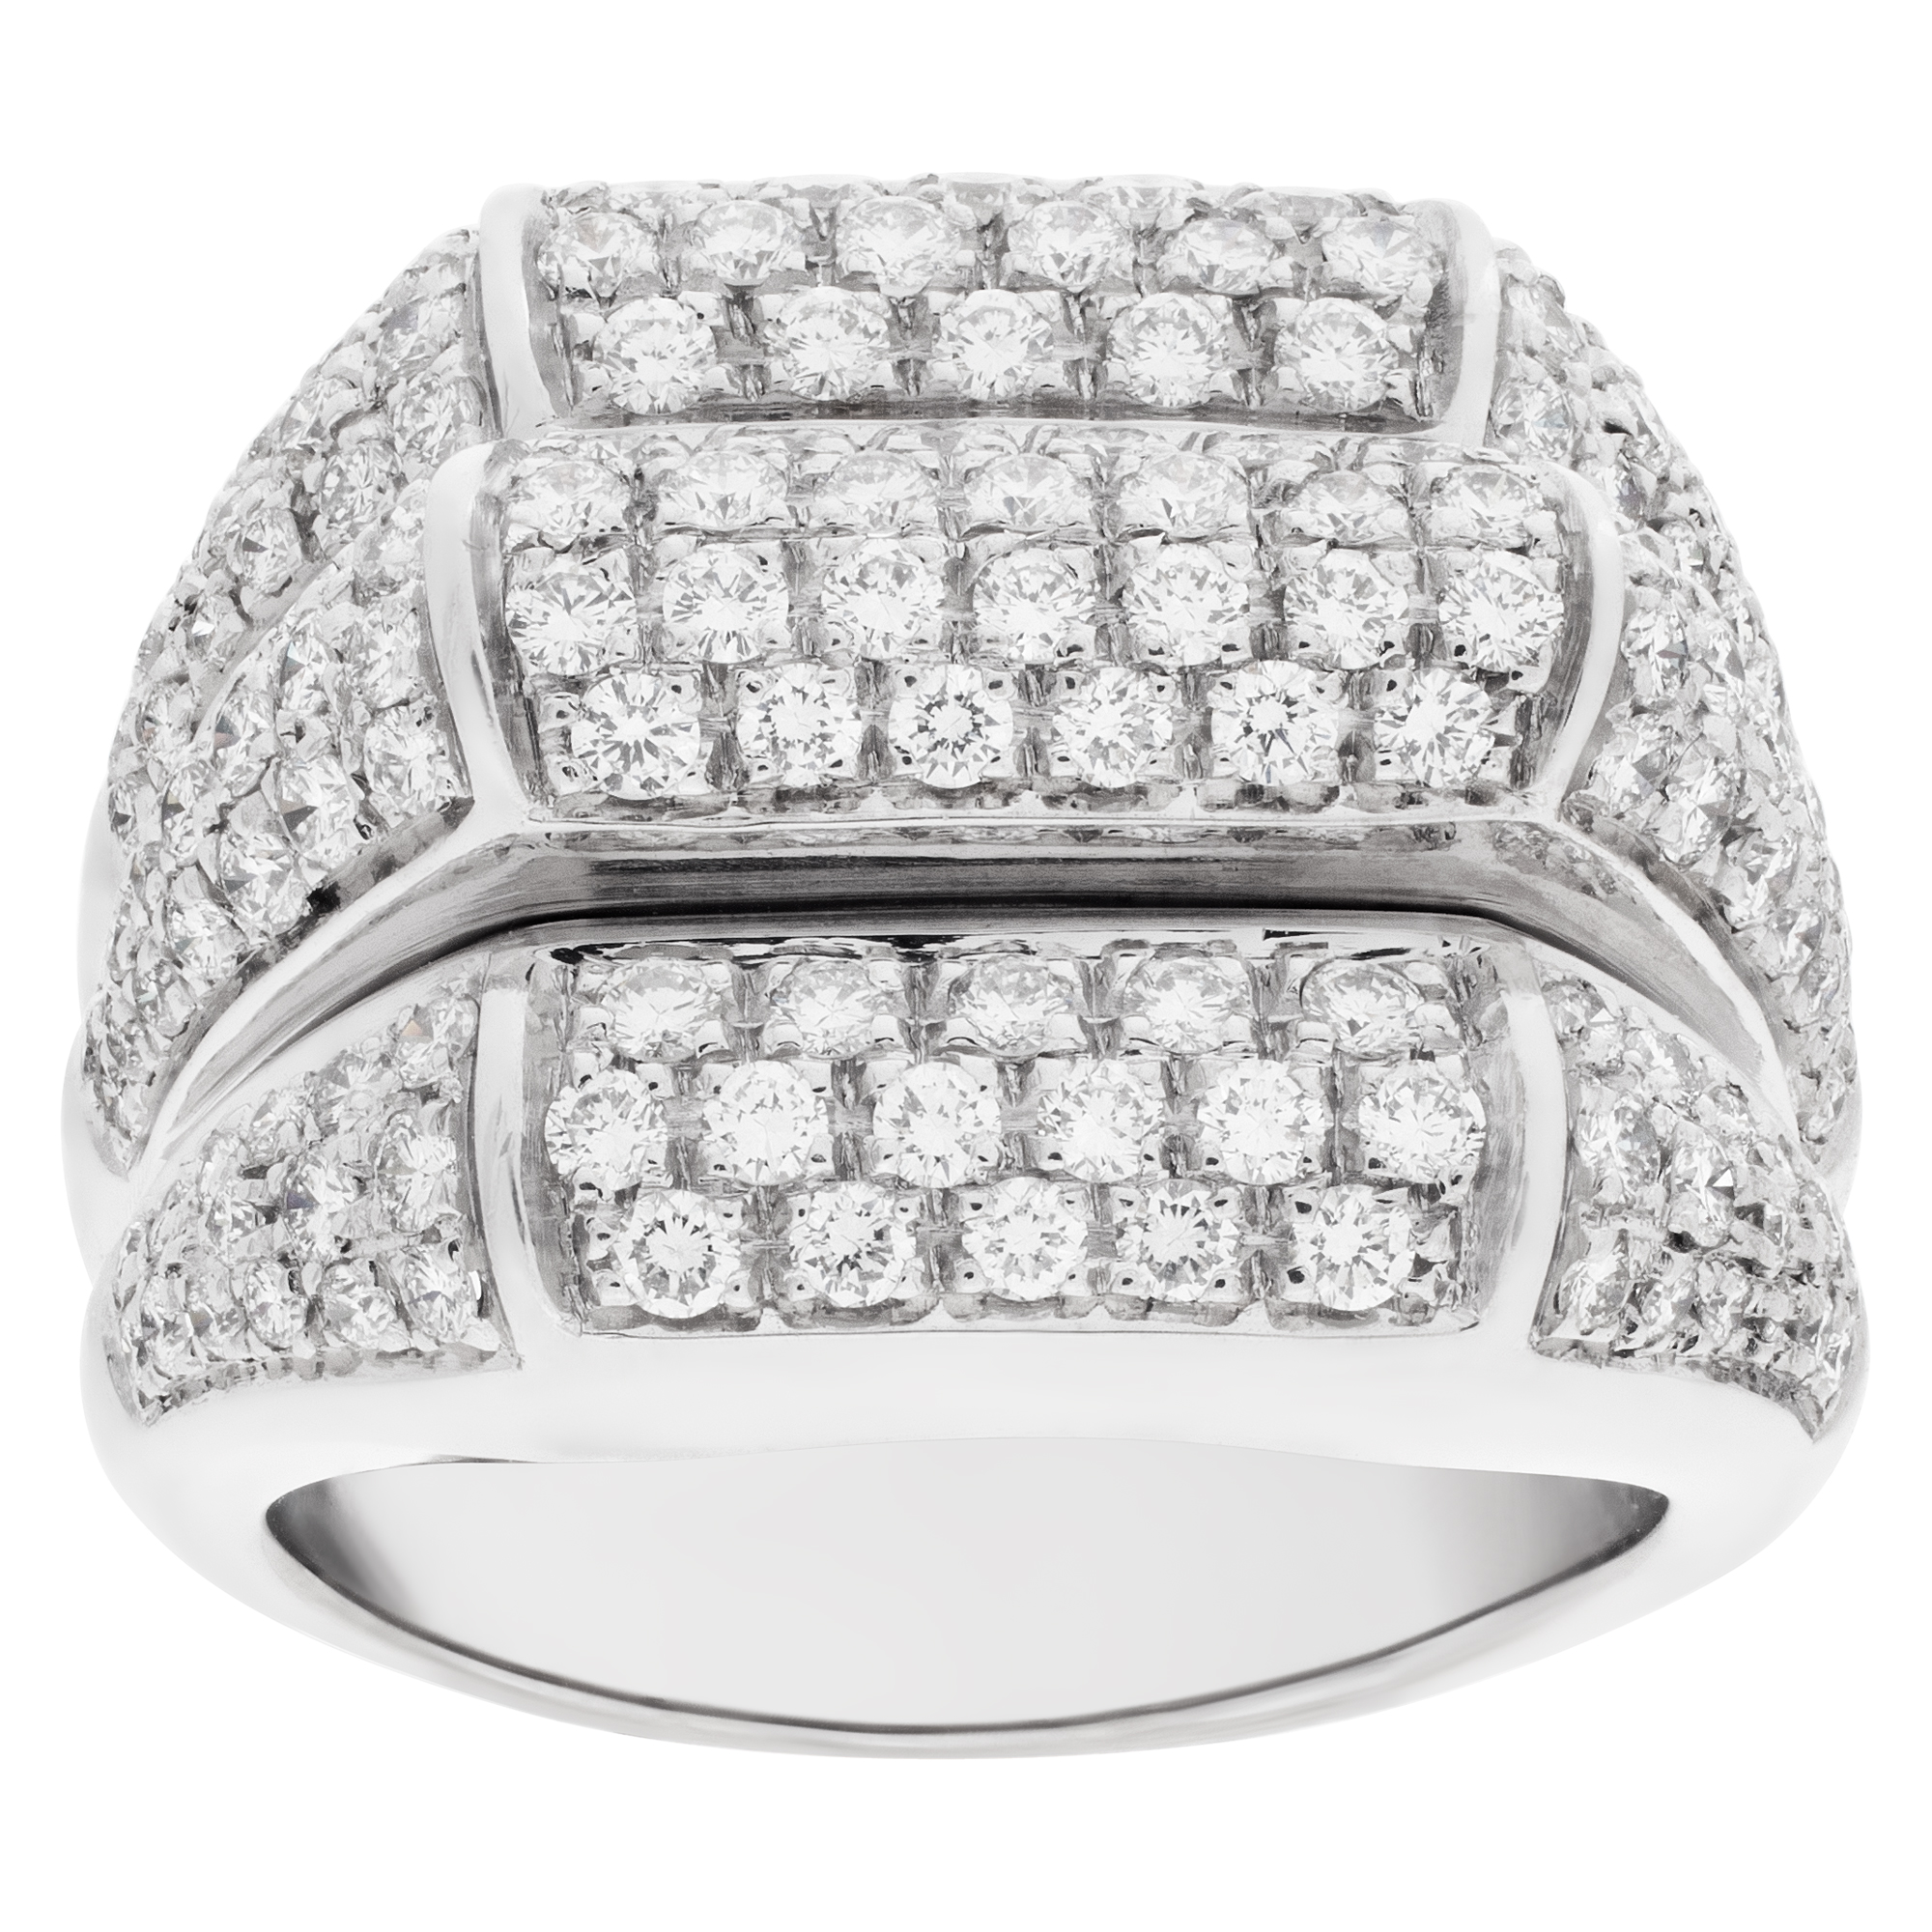 Elegant three-row pave diamond ring in 18k white gold